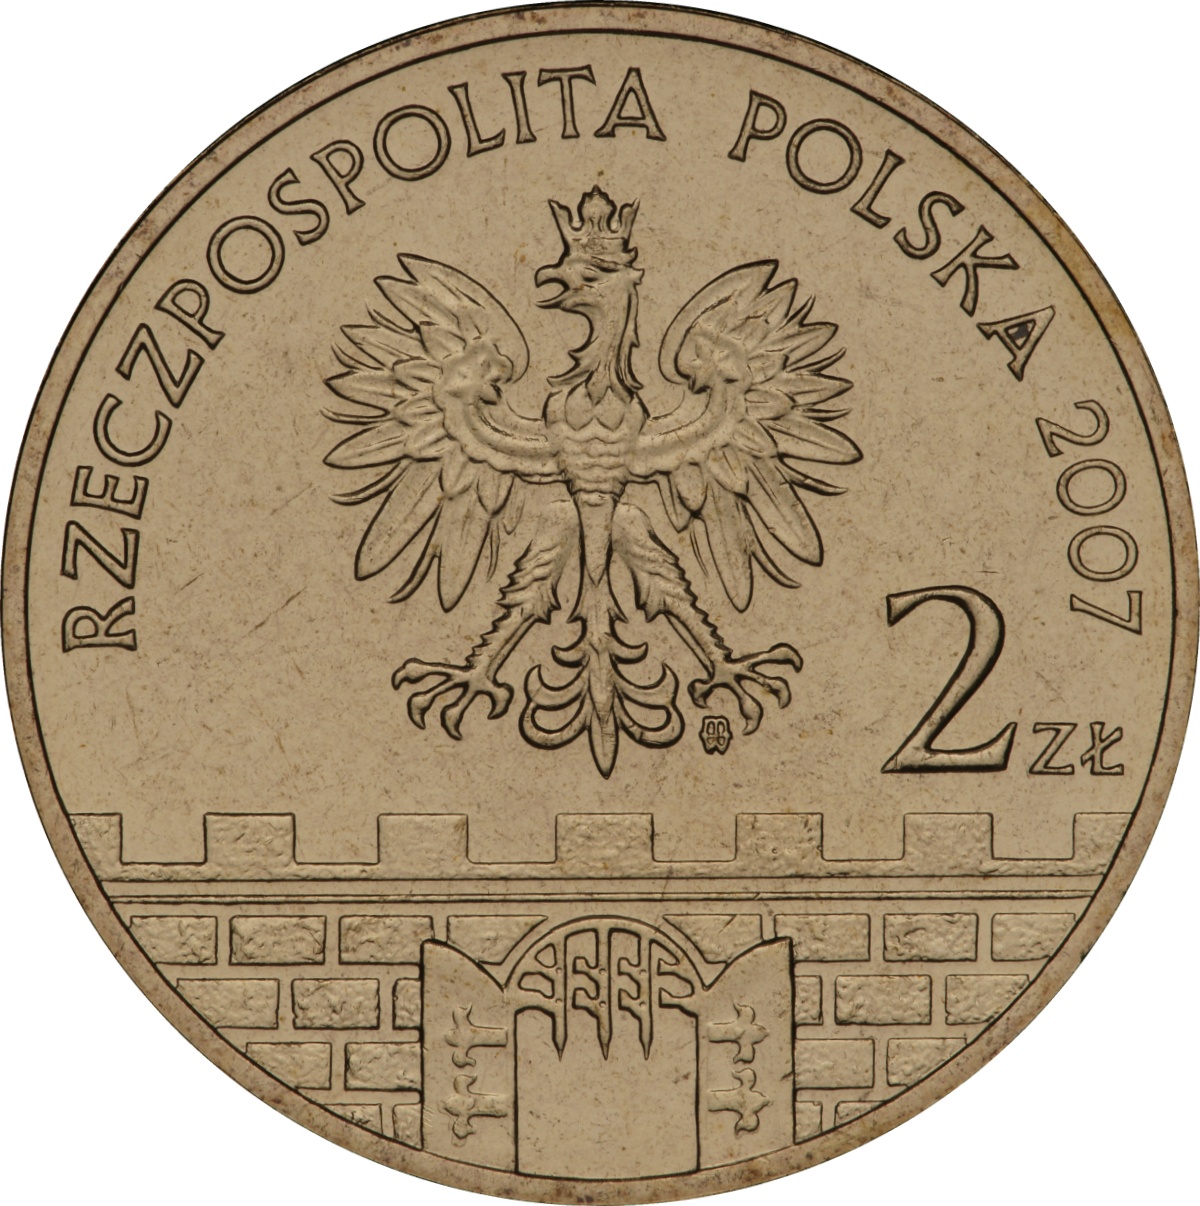 2zl-klodzko-awers-monety